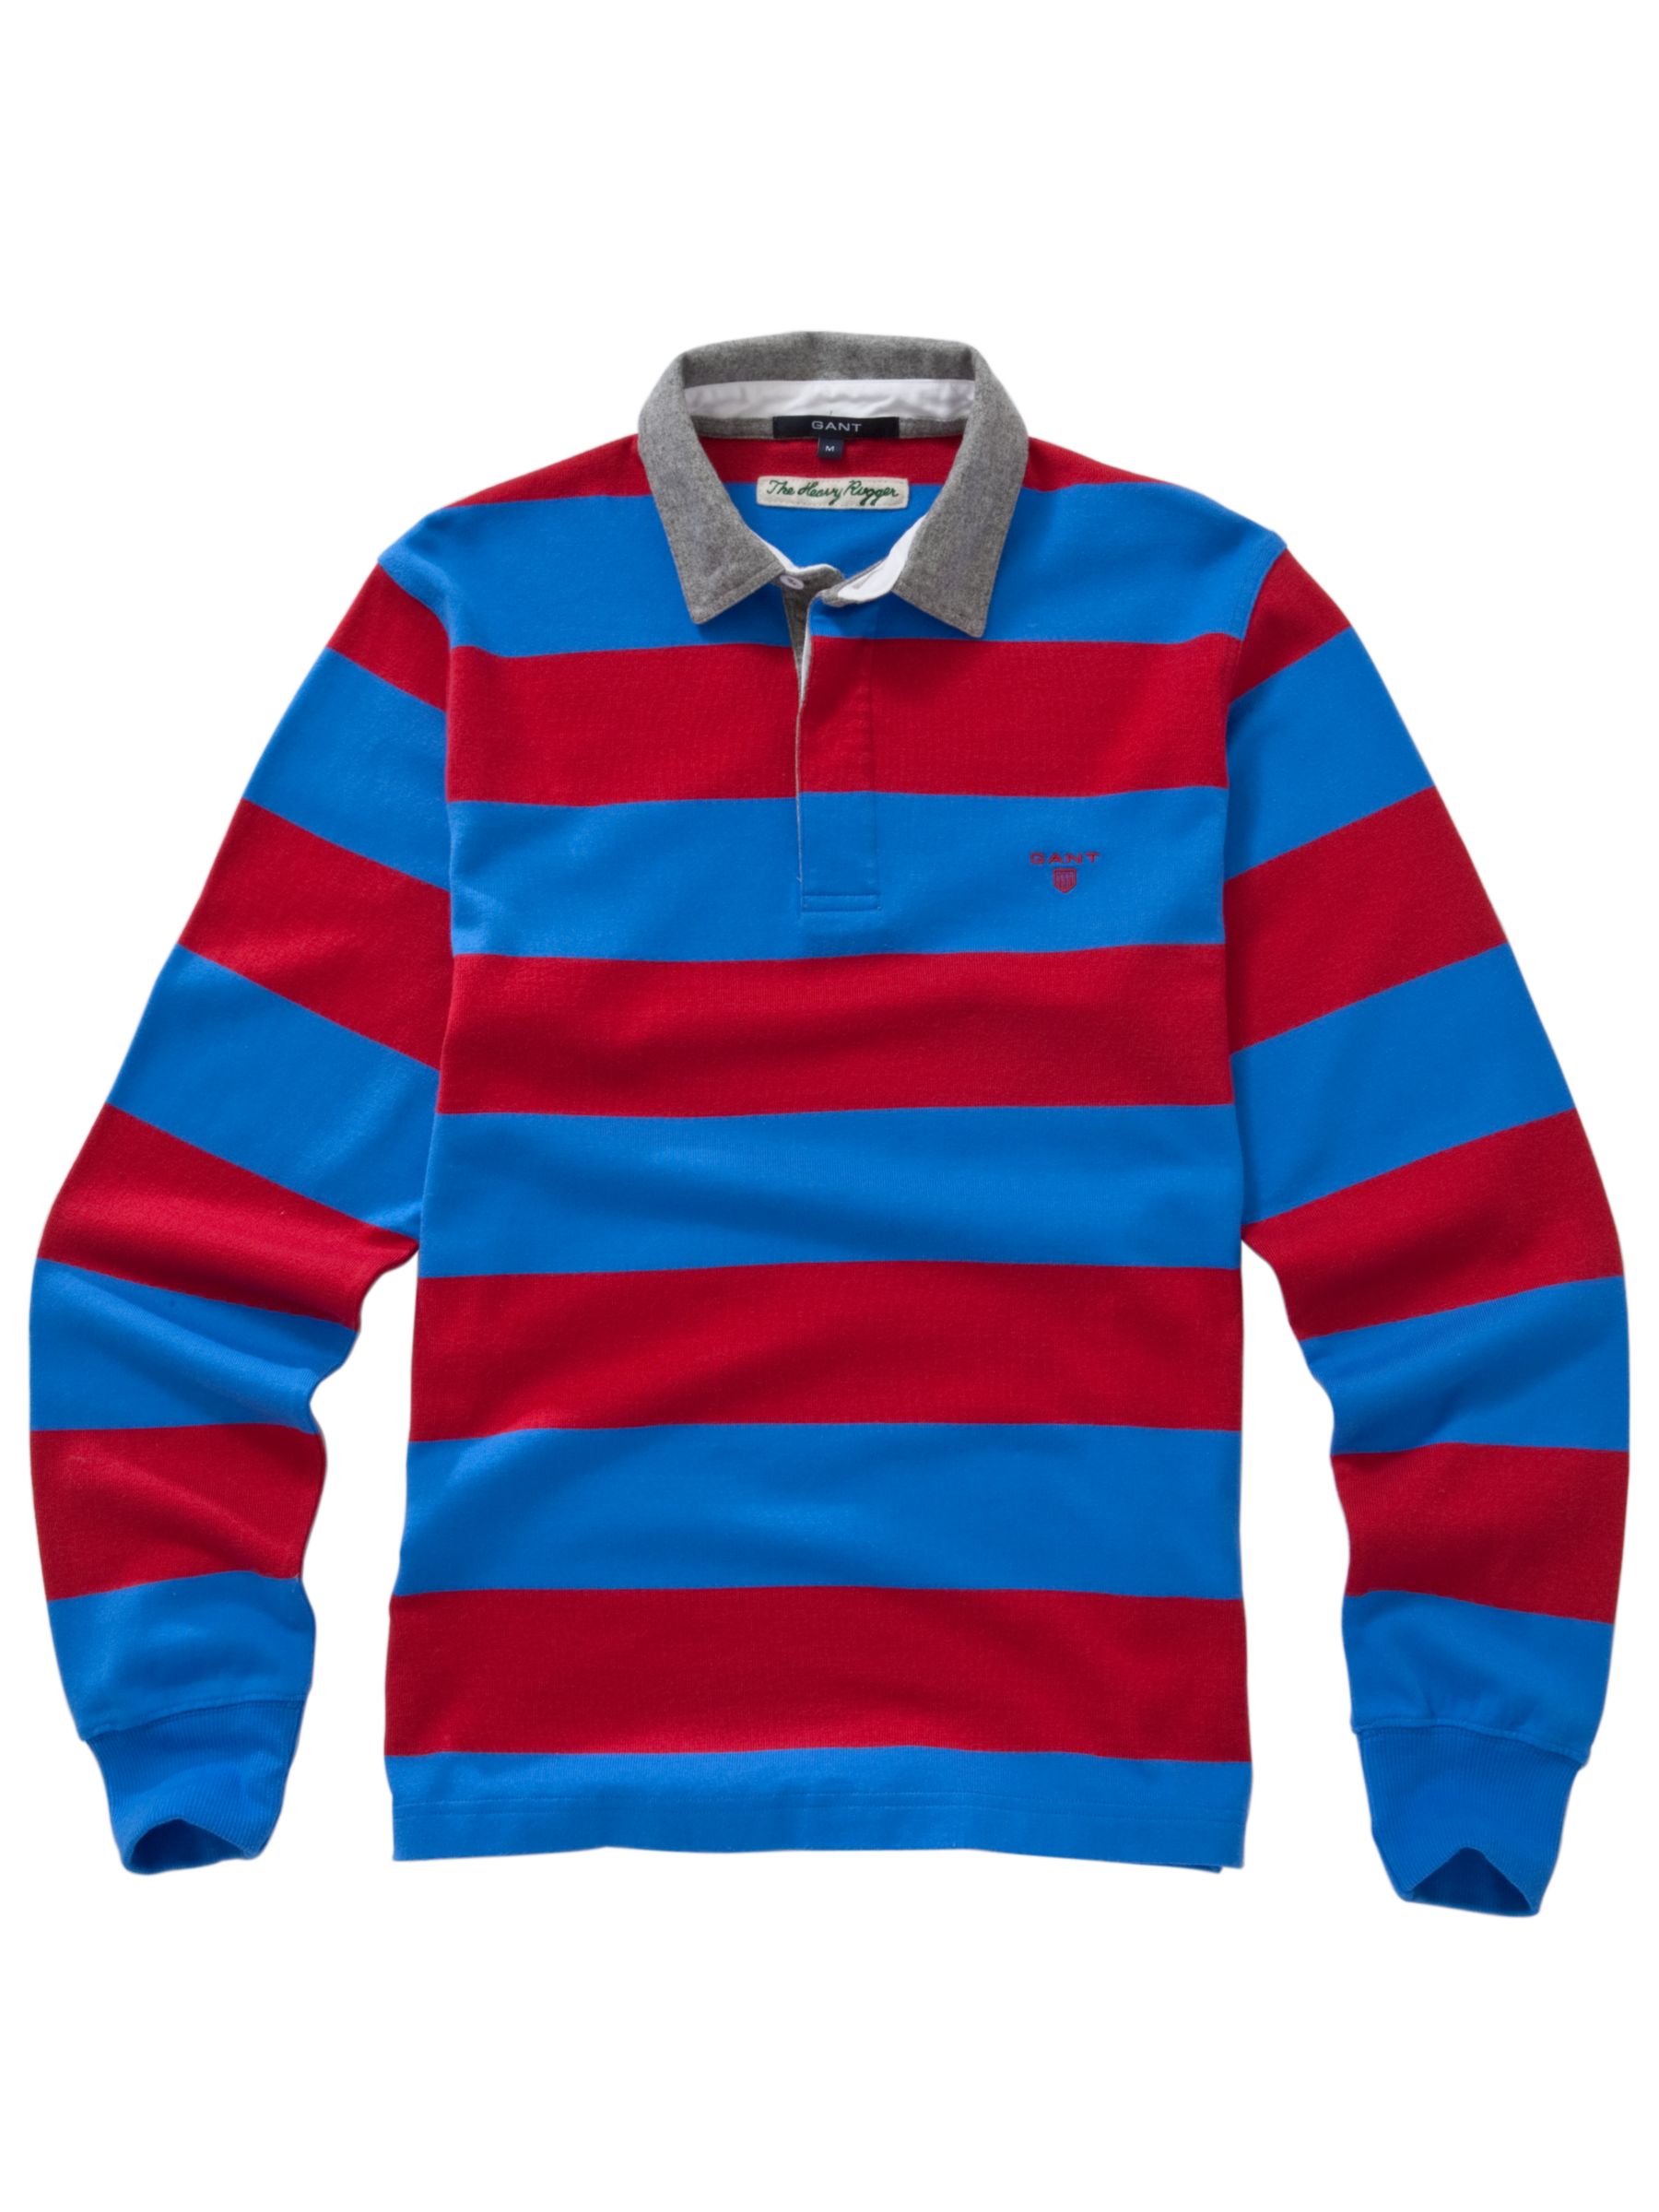 Gant Georgetown Bar Stripe Rugby Shirt, Blue/Red